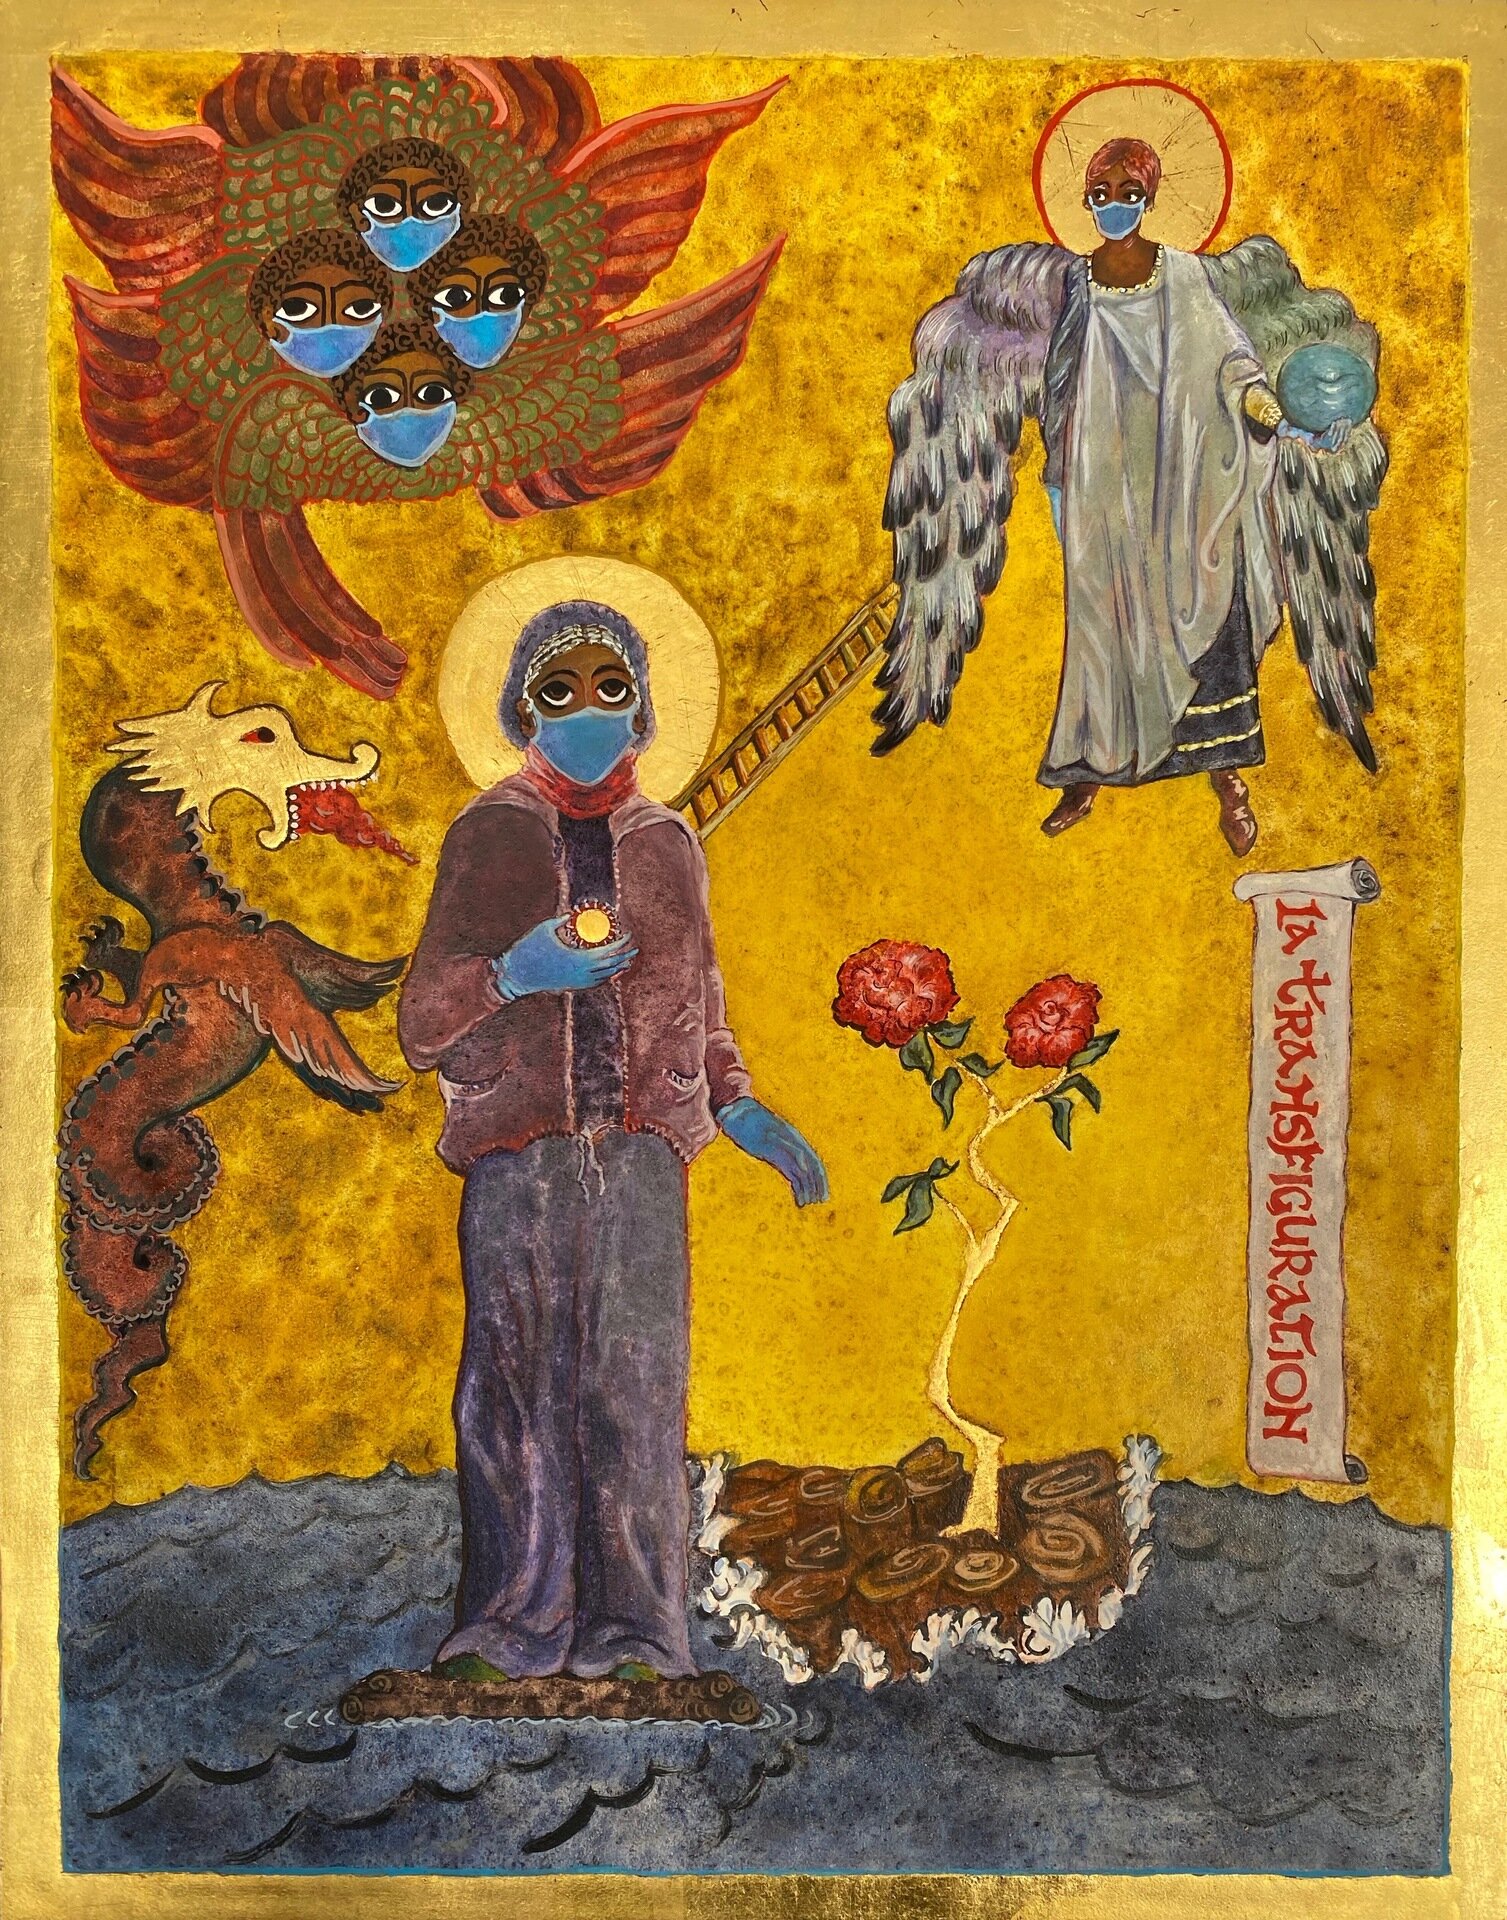   Roberta Levitow  “La Sainte Corona or The Transfiguration” 14" x 11" x 1"; Egg tempera and goldleaf on gesso board $2500. 